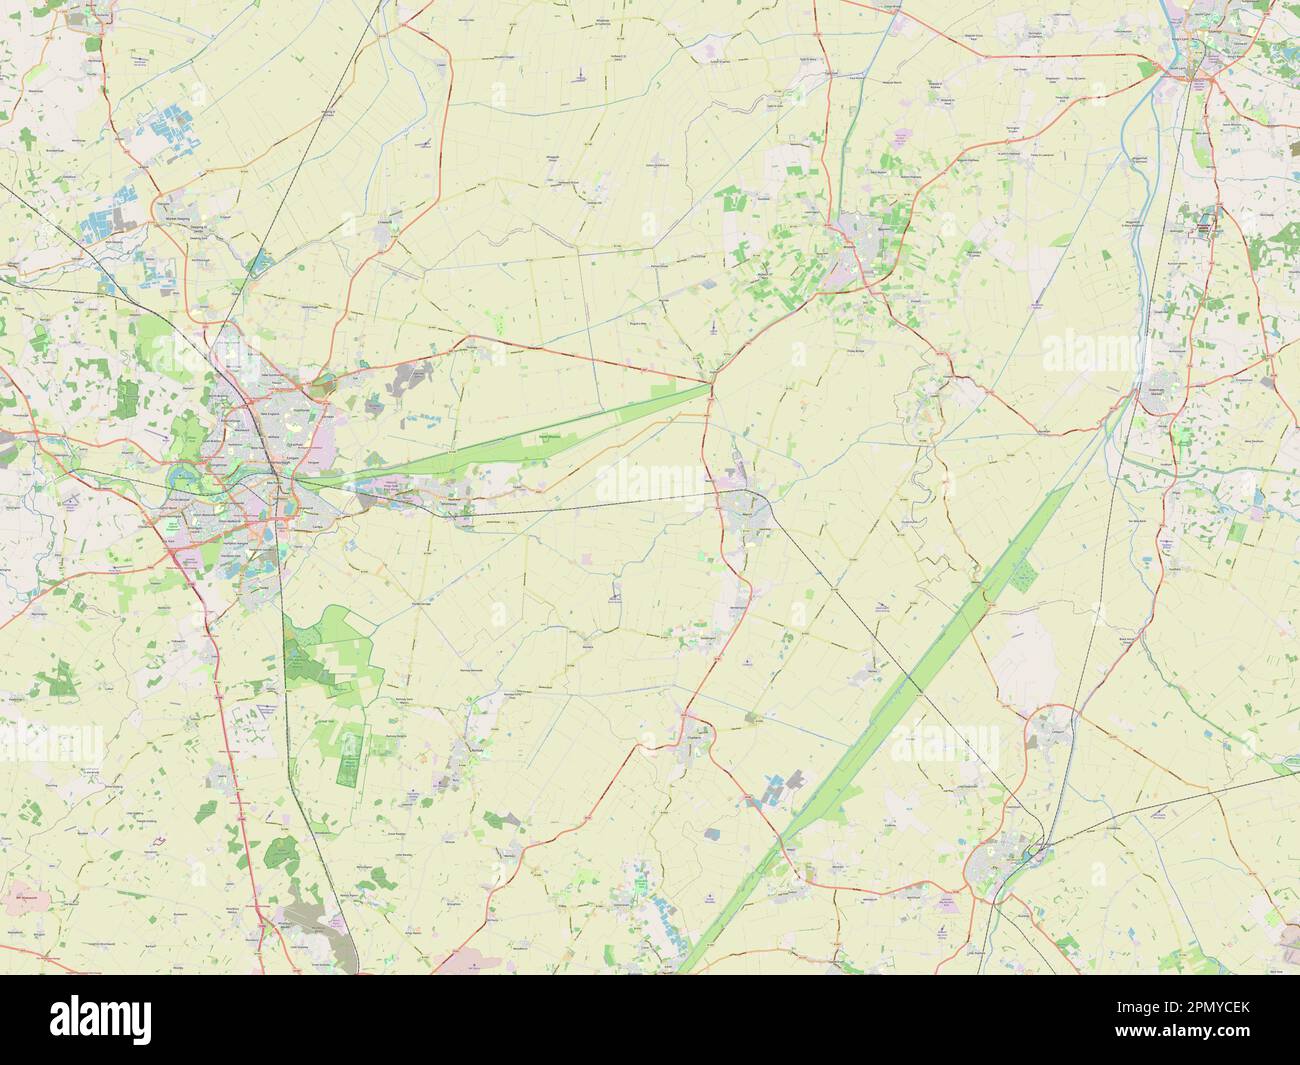 Fenland, non metropolitan district of England - Great Britain. Open Street Map Stock Photo